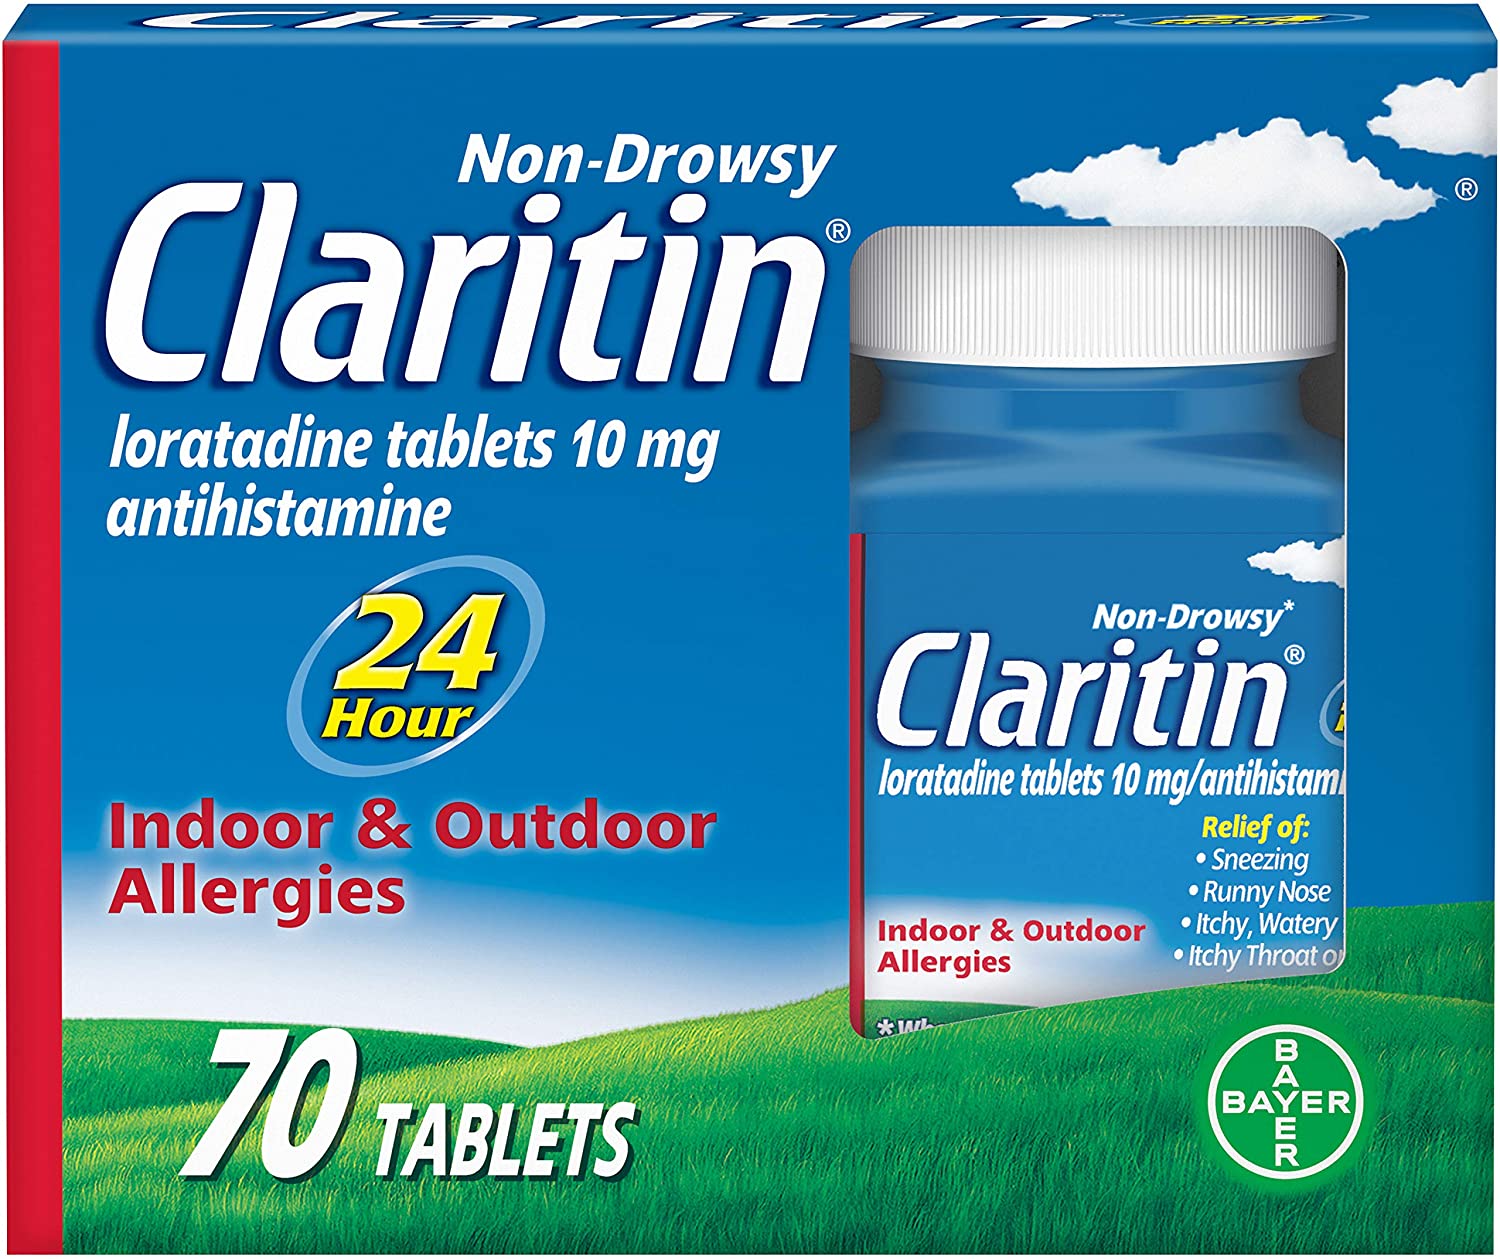 Claritin 24 Hour Non-Drowsy Allergy Medicine, Loratadine Antihistamine Tablets, 70 Ct - image 1 of 6